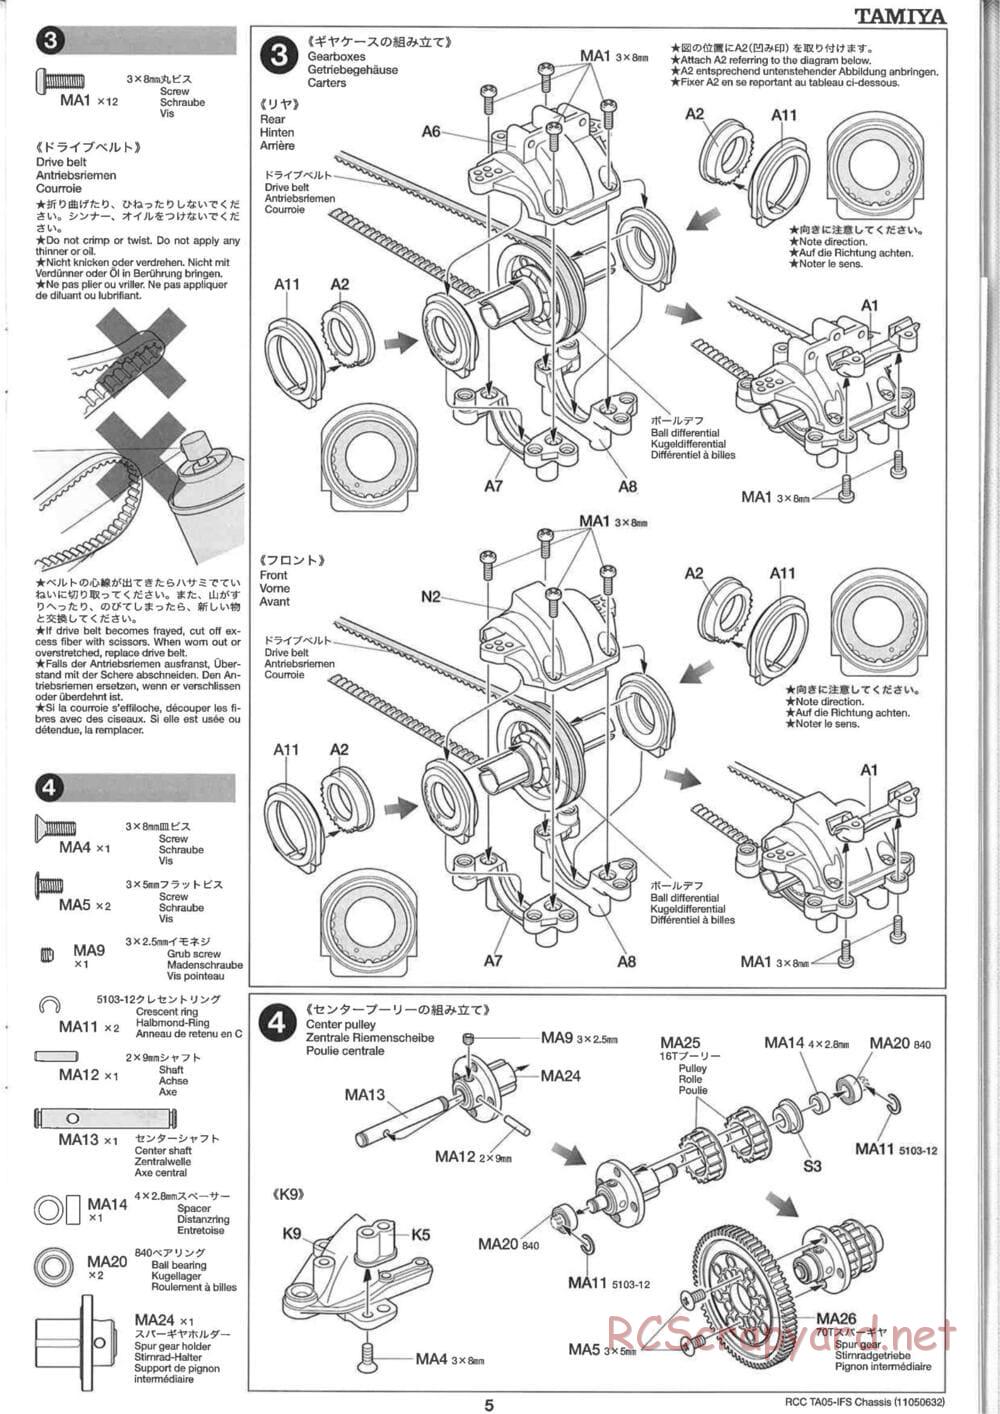 Tamiya - TA05-IFS Chassis - Manual - Page 5